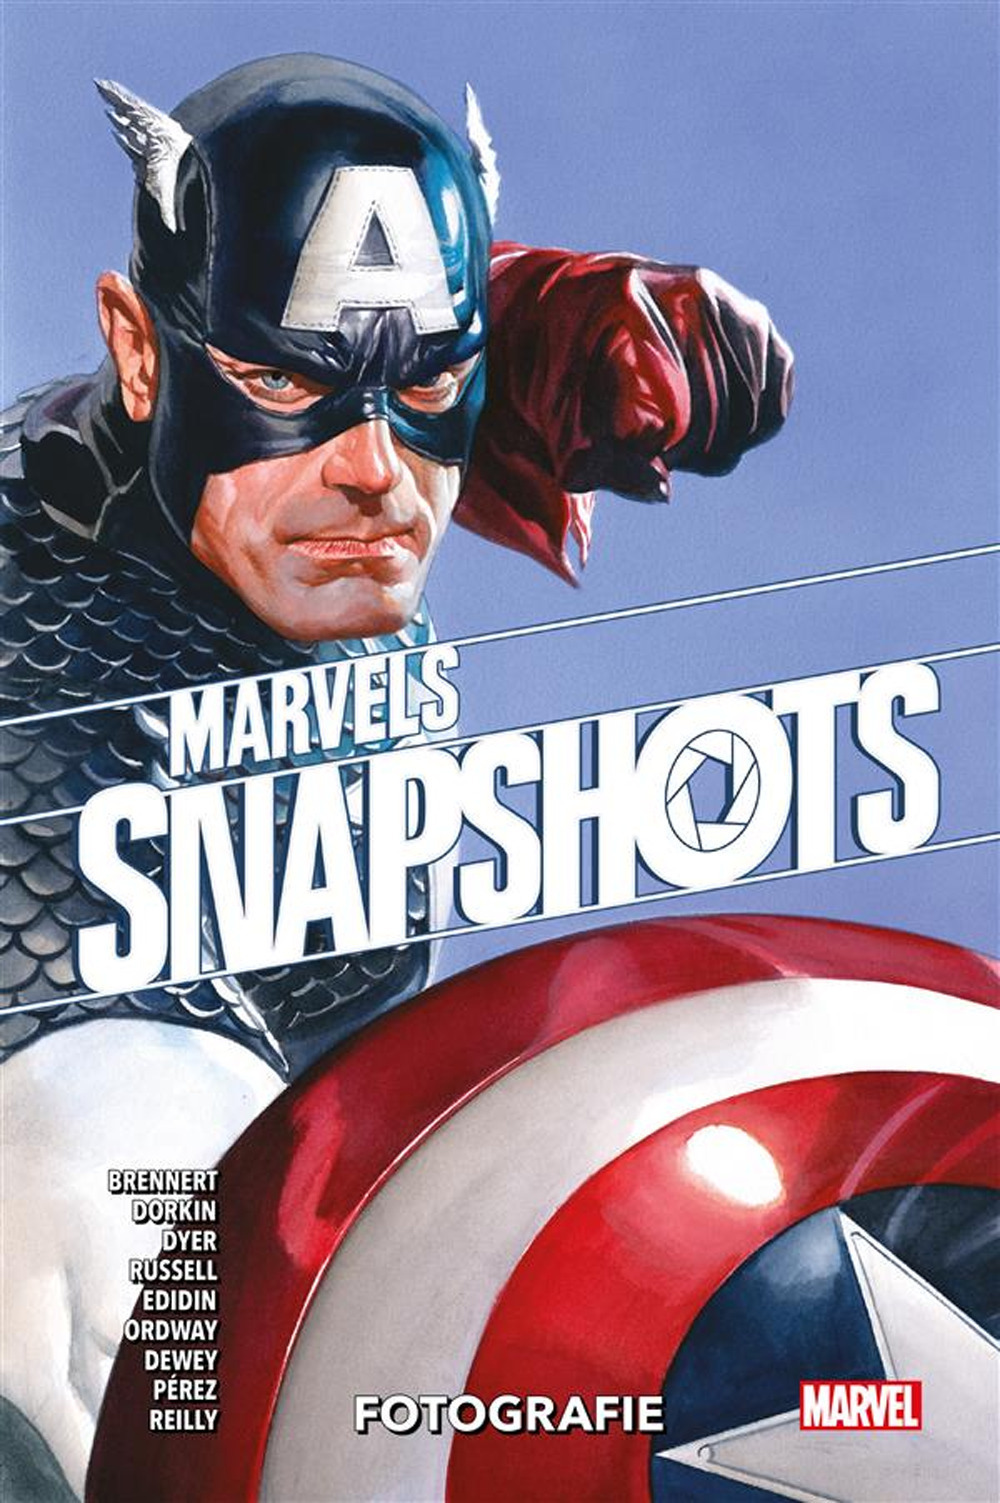 Marvels snapshots. Vol. 1: Fotografie